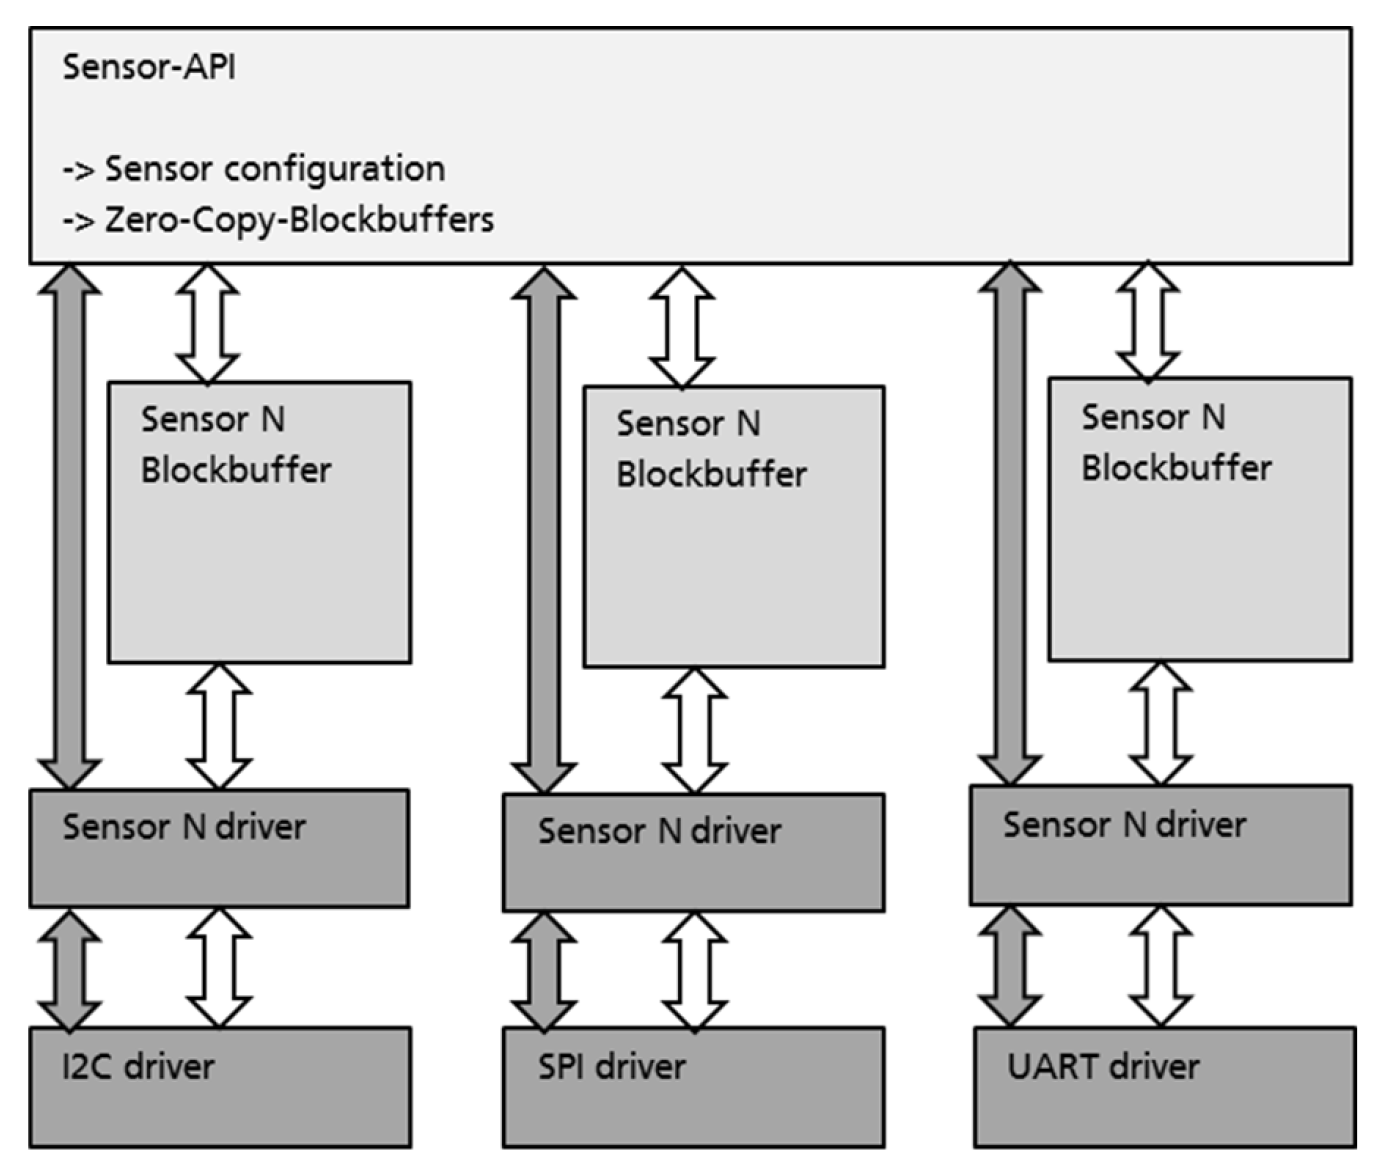 Sensor API structure